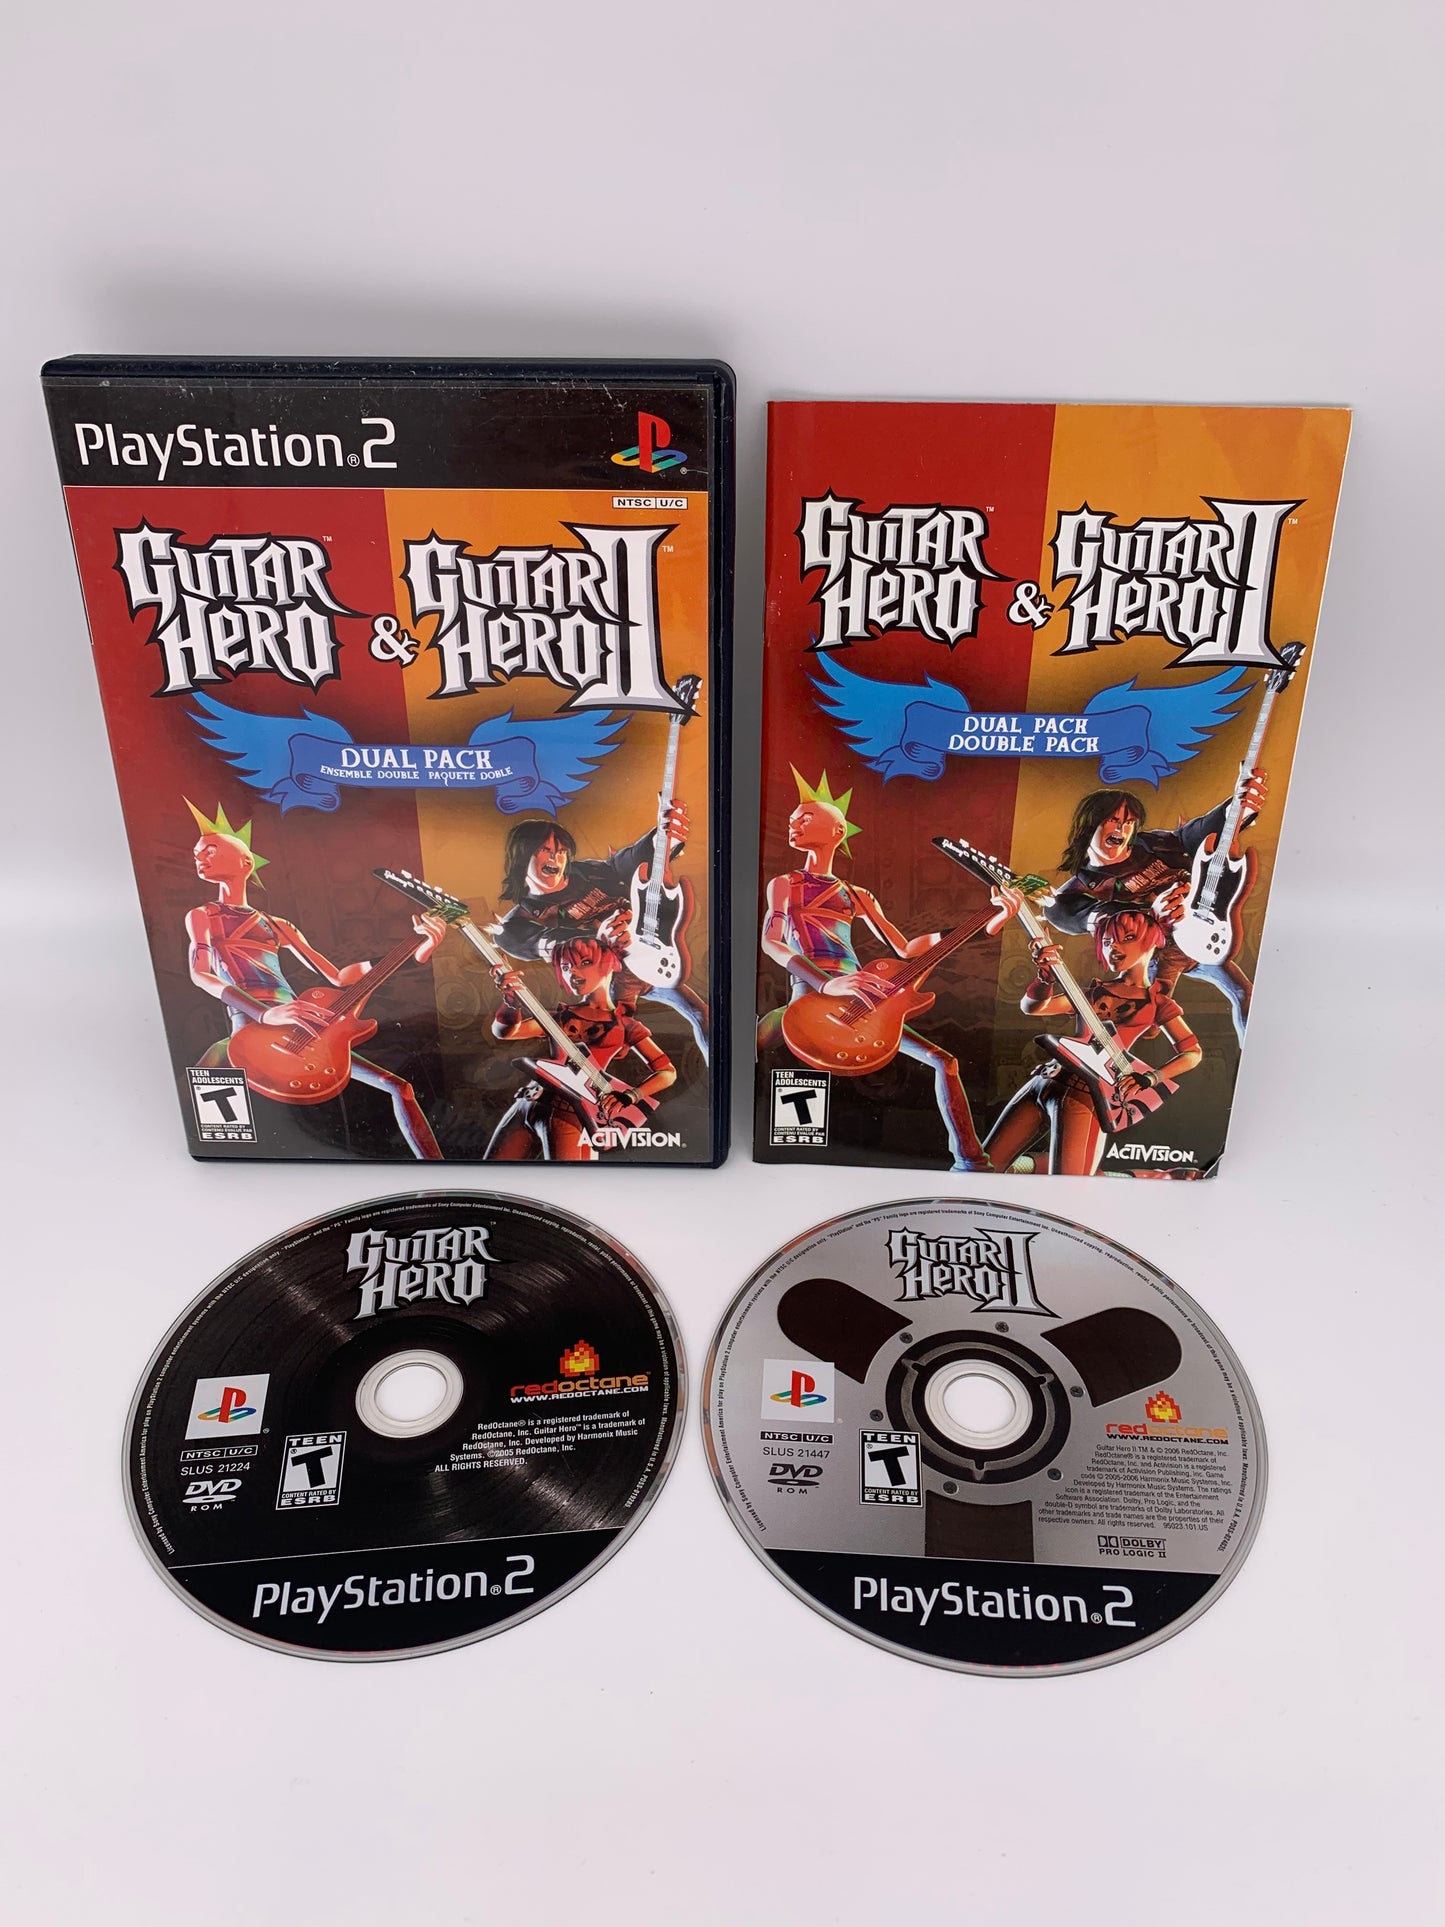 PiXEL-RETRO.COM : SONY PLAYSTATION 2 (PS2) COMPLET CIB BOX MANUAL GAME NTSC GUITAR HERO II DUAL PACK